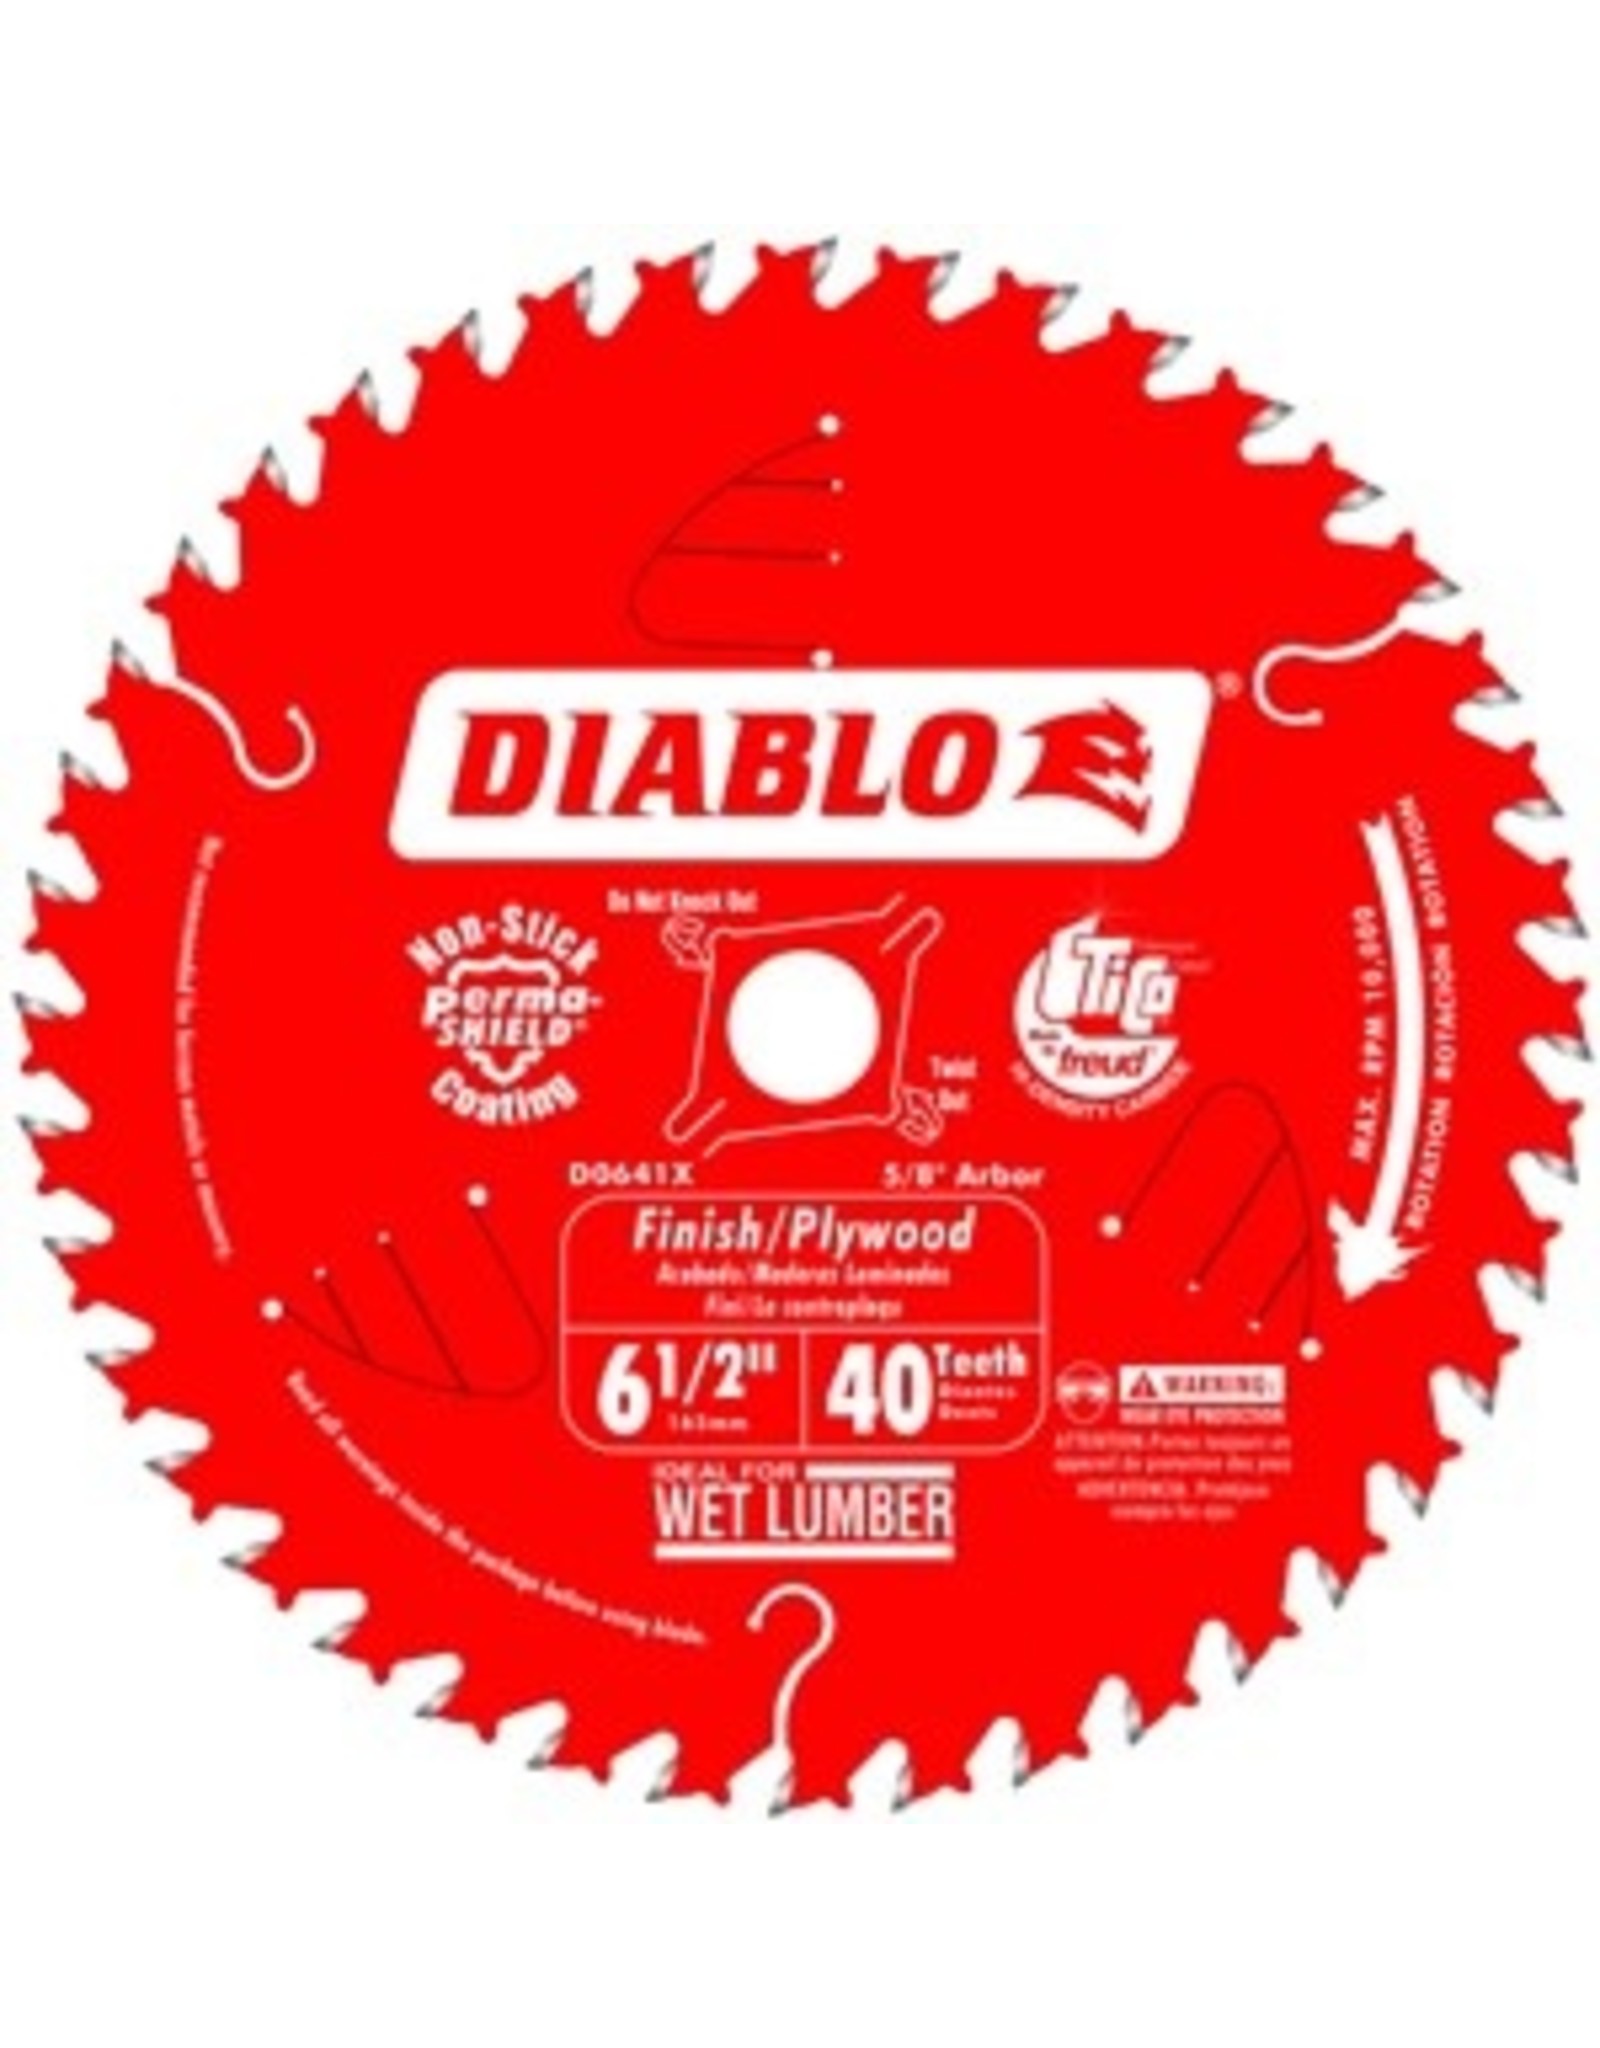 Diablo Diablo D0641A Circular Saw Blade, 6-1/2 in Dia, 5/8 in Arbor, 40-Teeth, Applicable Materials: Hardwood, Plywood